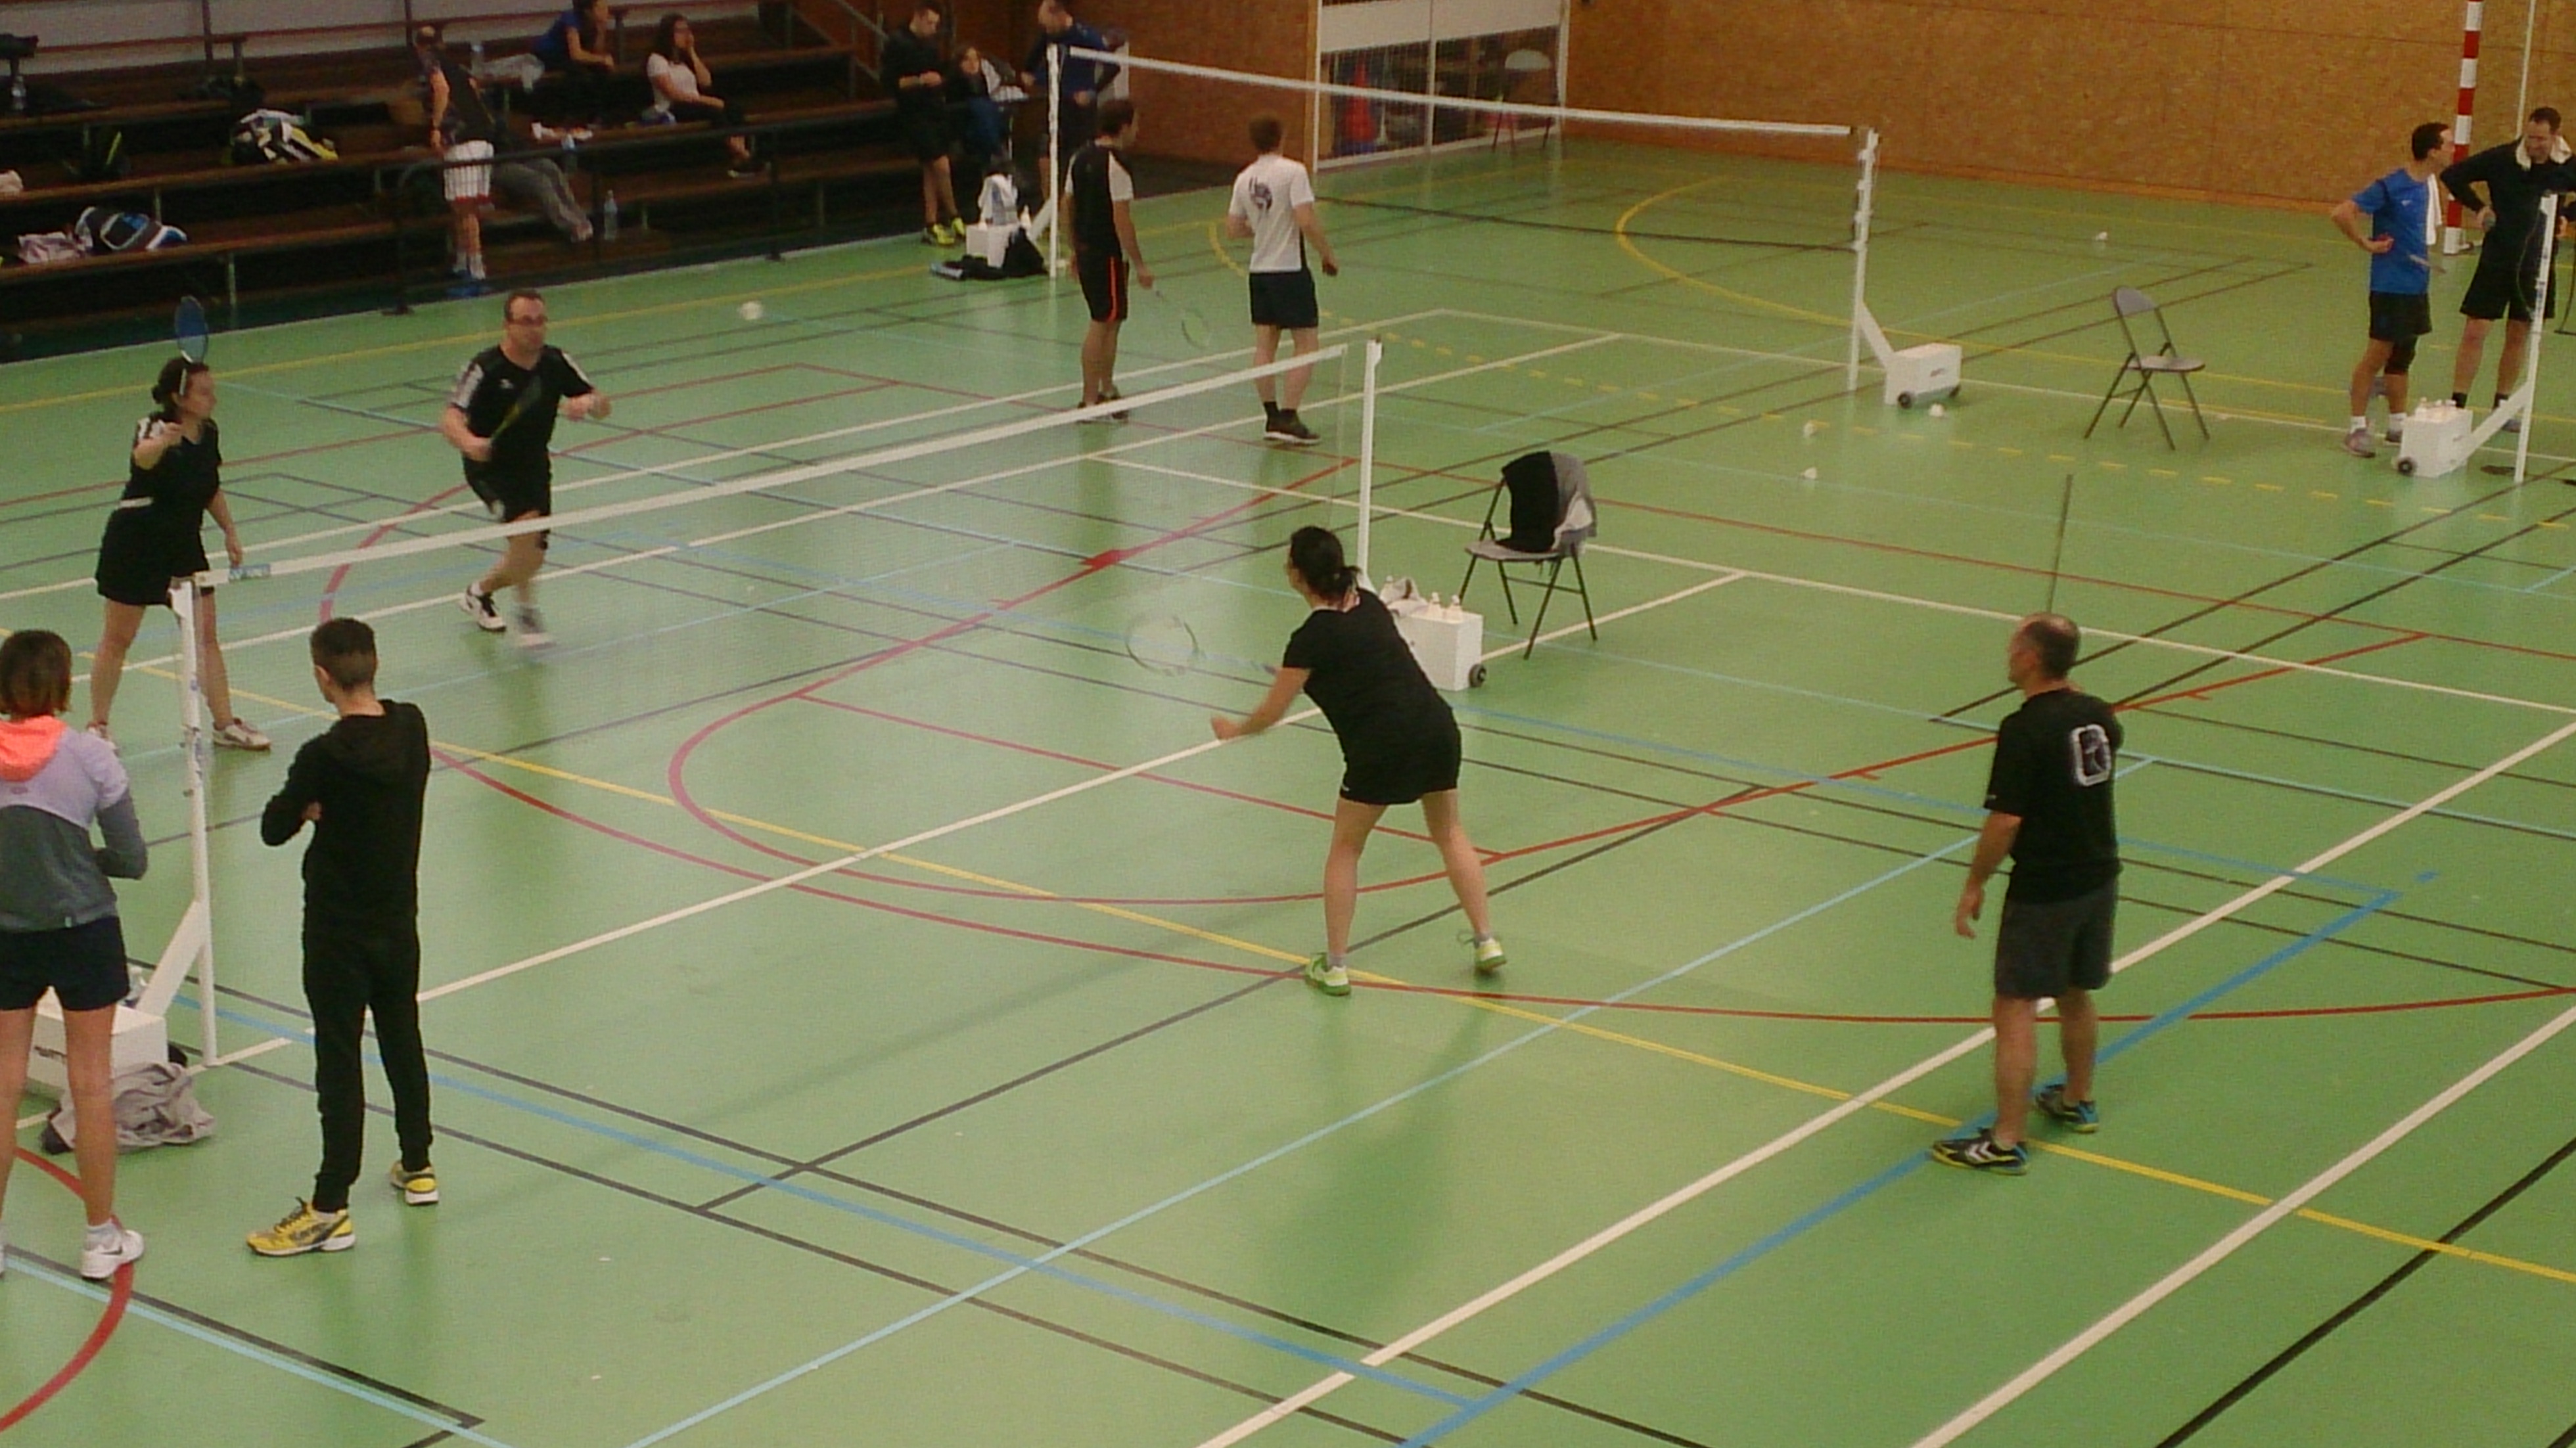 Lamballe Badminton Club #